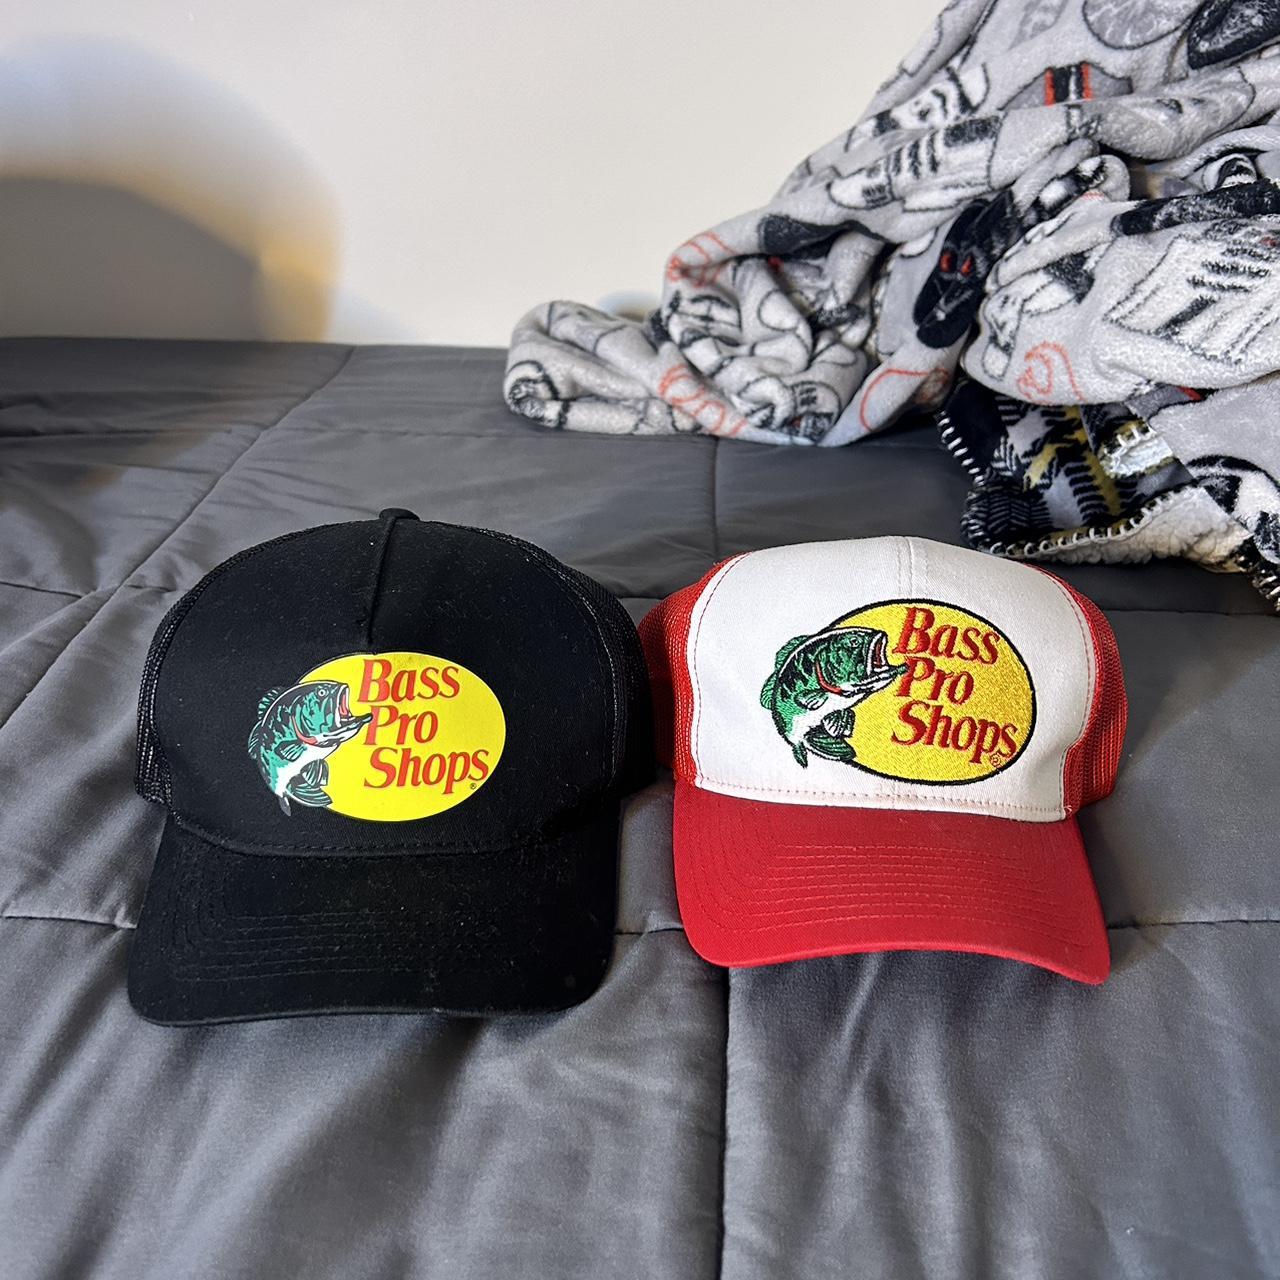 2 Bass Pro shop hats